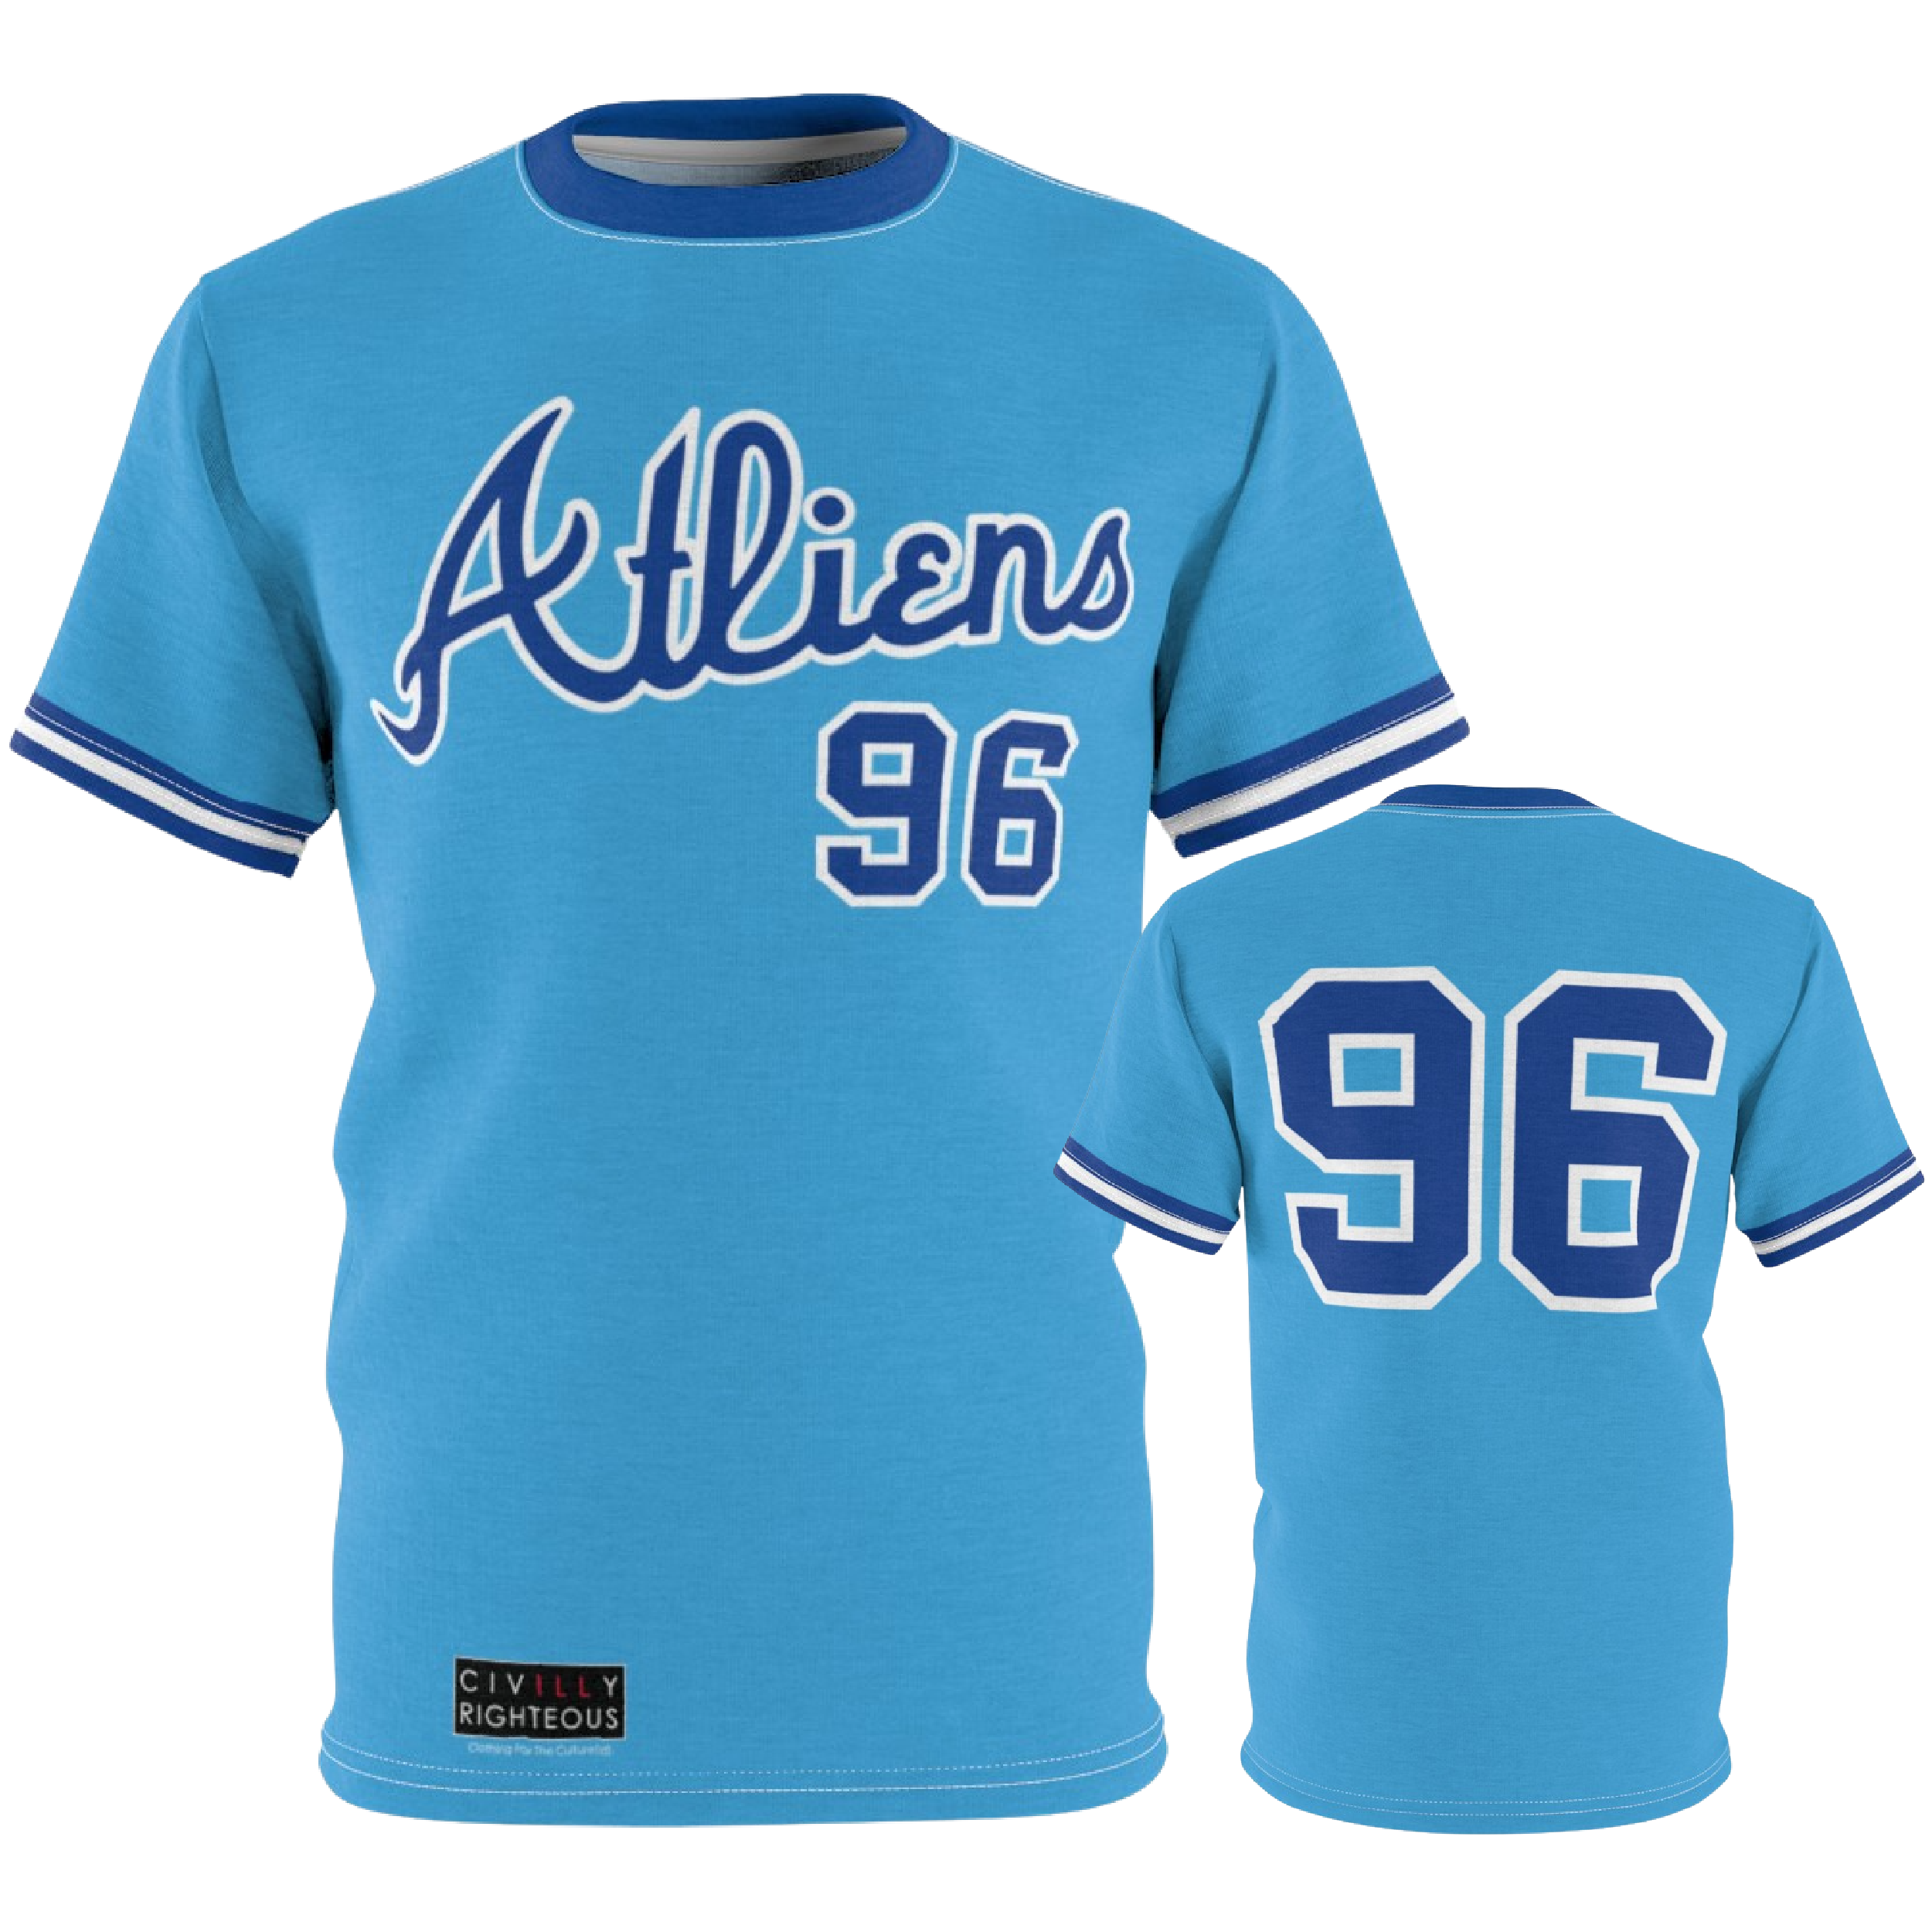 Atliens - Outkast Andre 3000 Atlanta Hawks Parody - Baseball Jersey –  Civilly Righteous Clothing